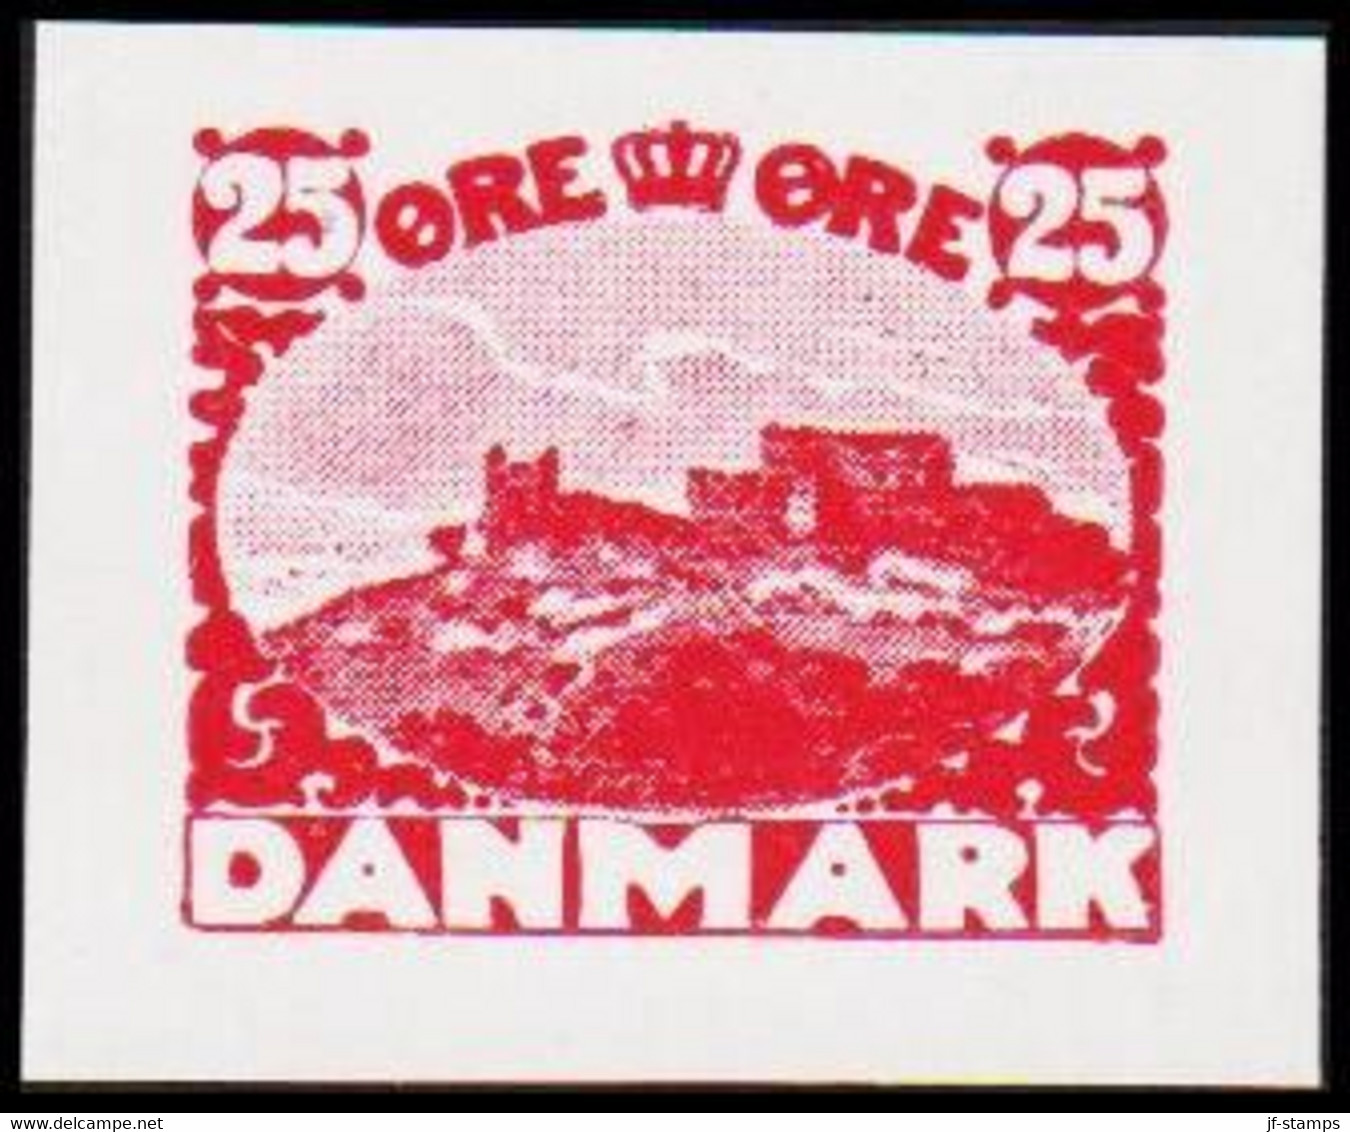 1930. DANMARK. Essay. Hammershus Bornholm. 25 øre. - JF525189 - Prove E Ristampe